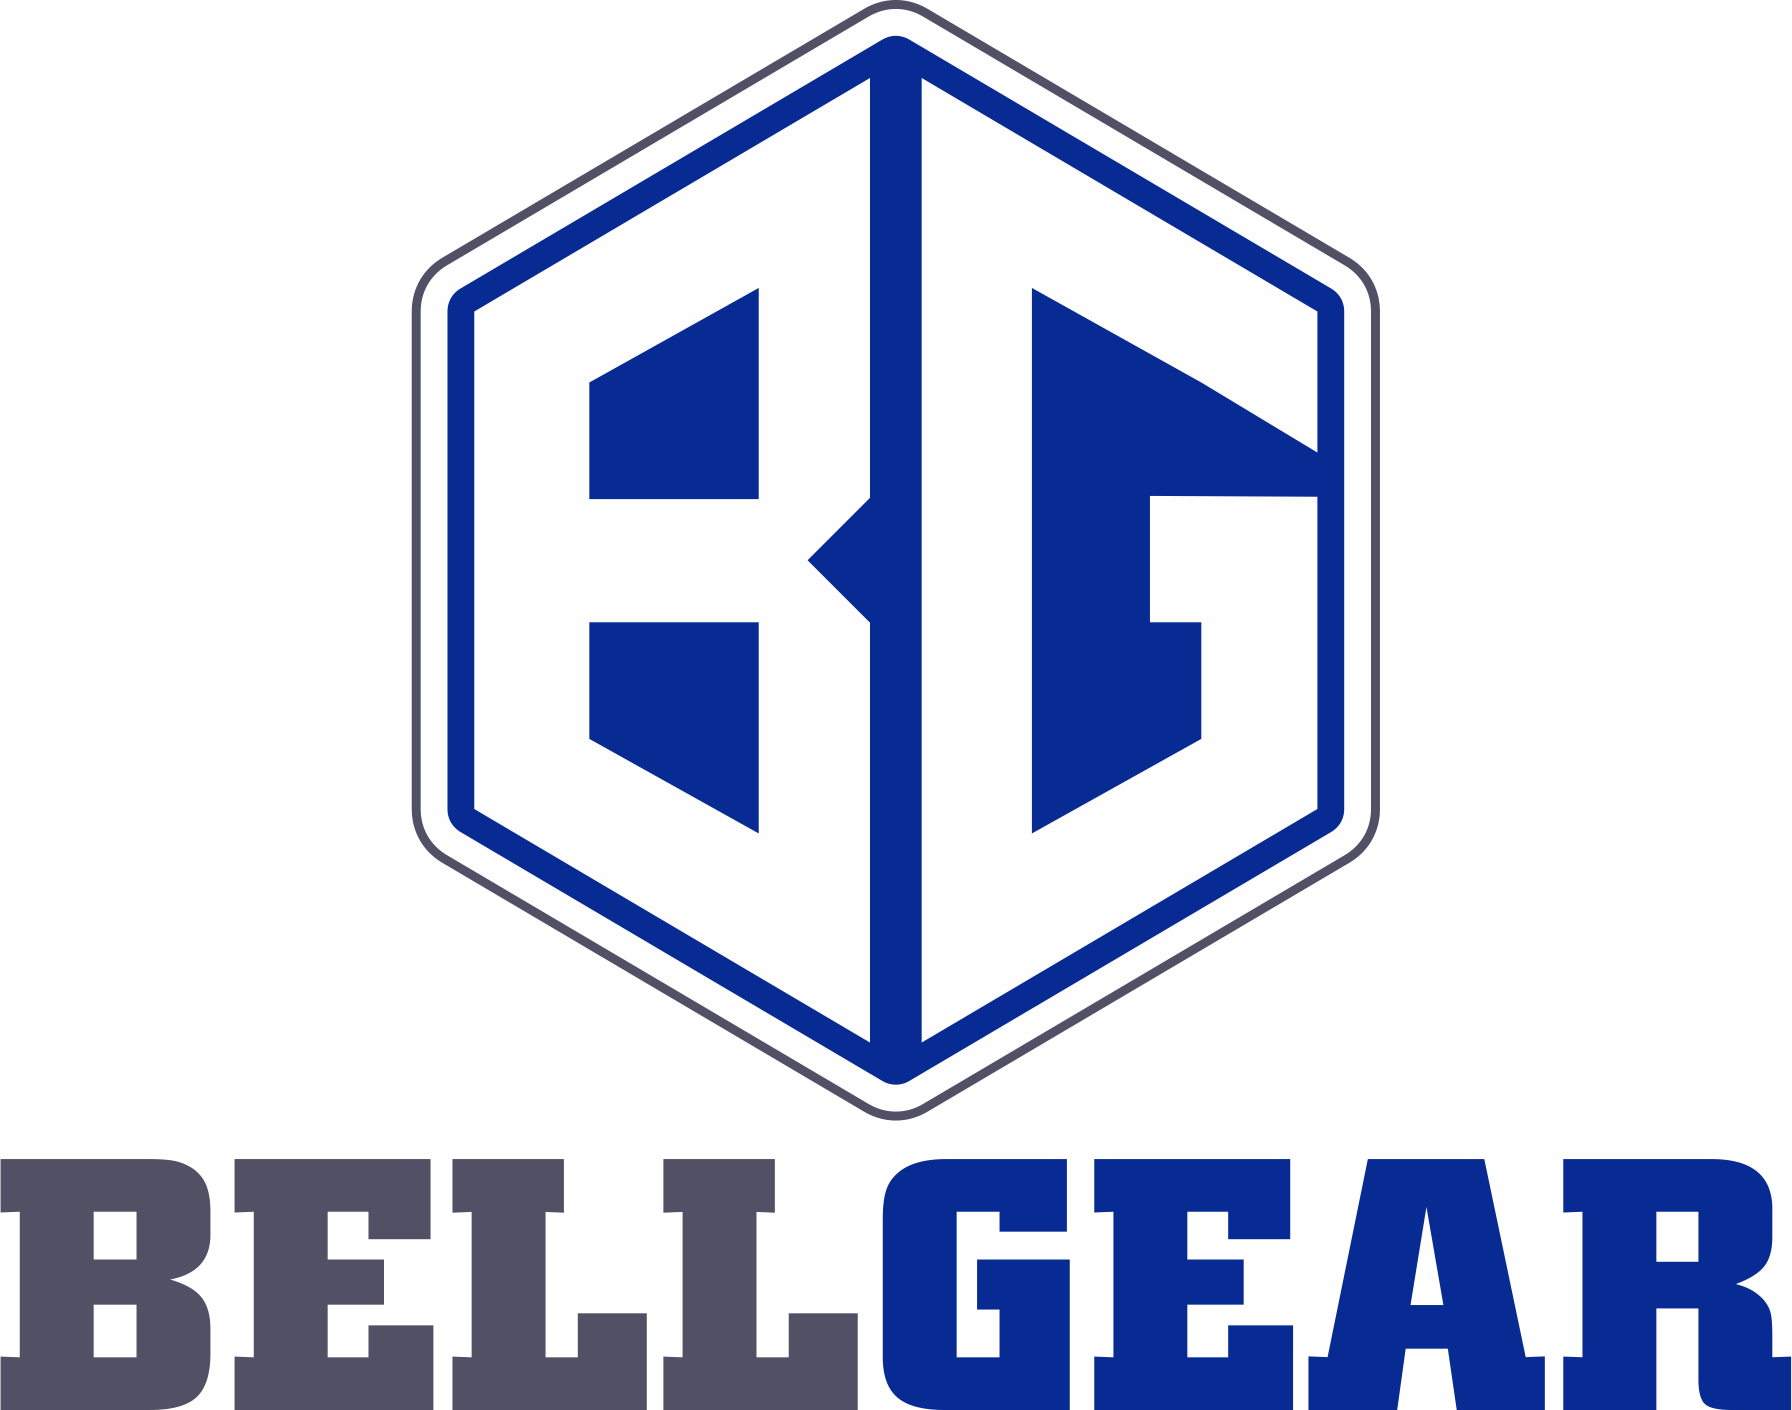 BellGear